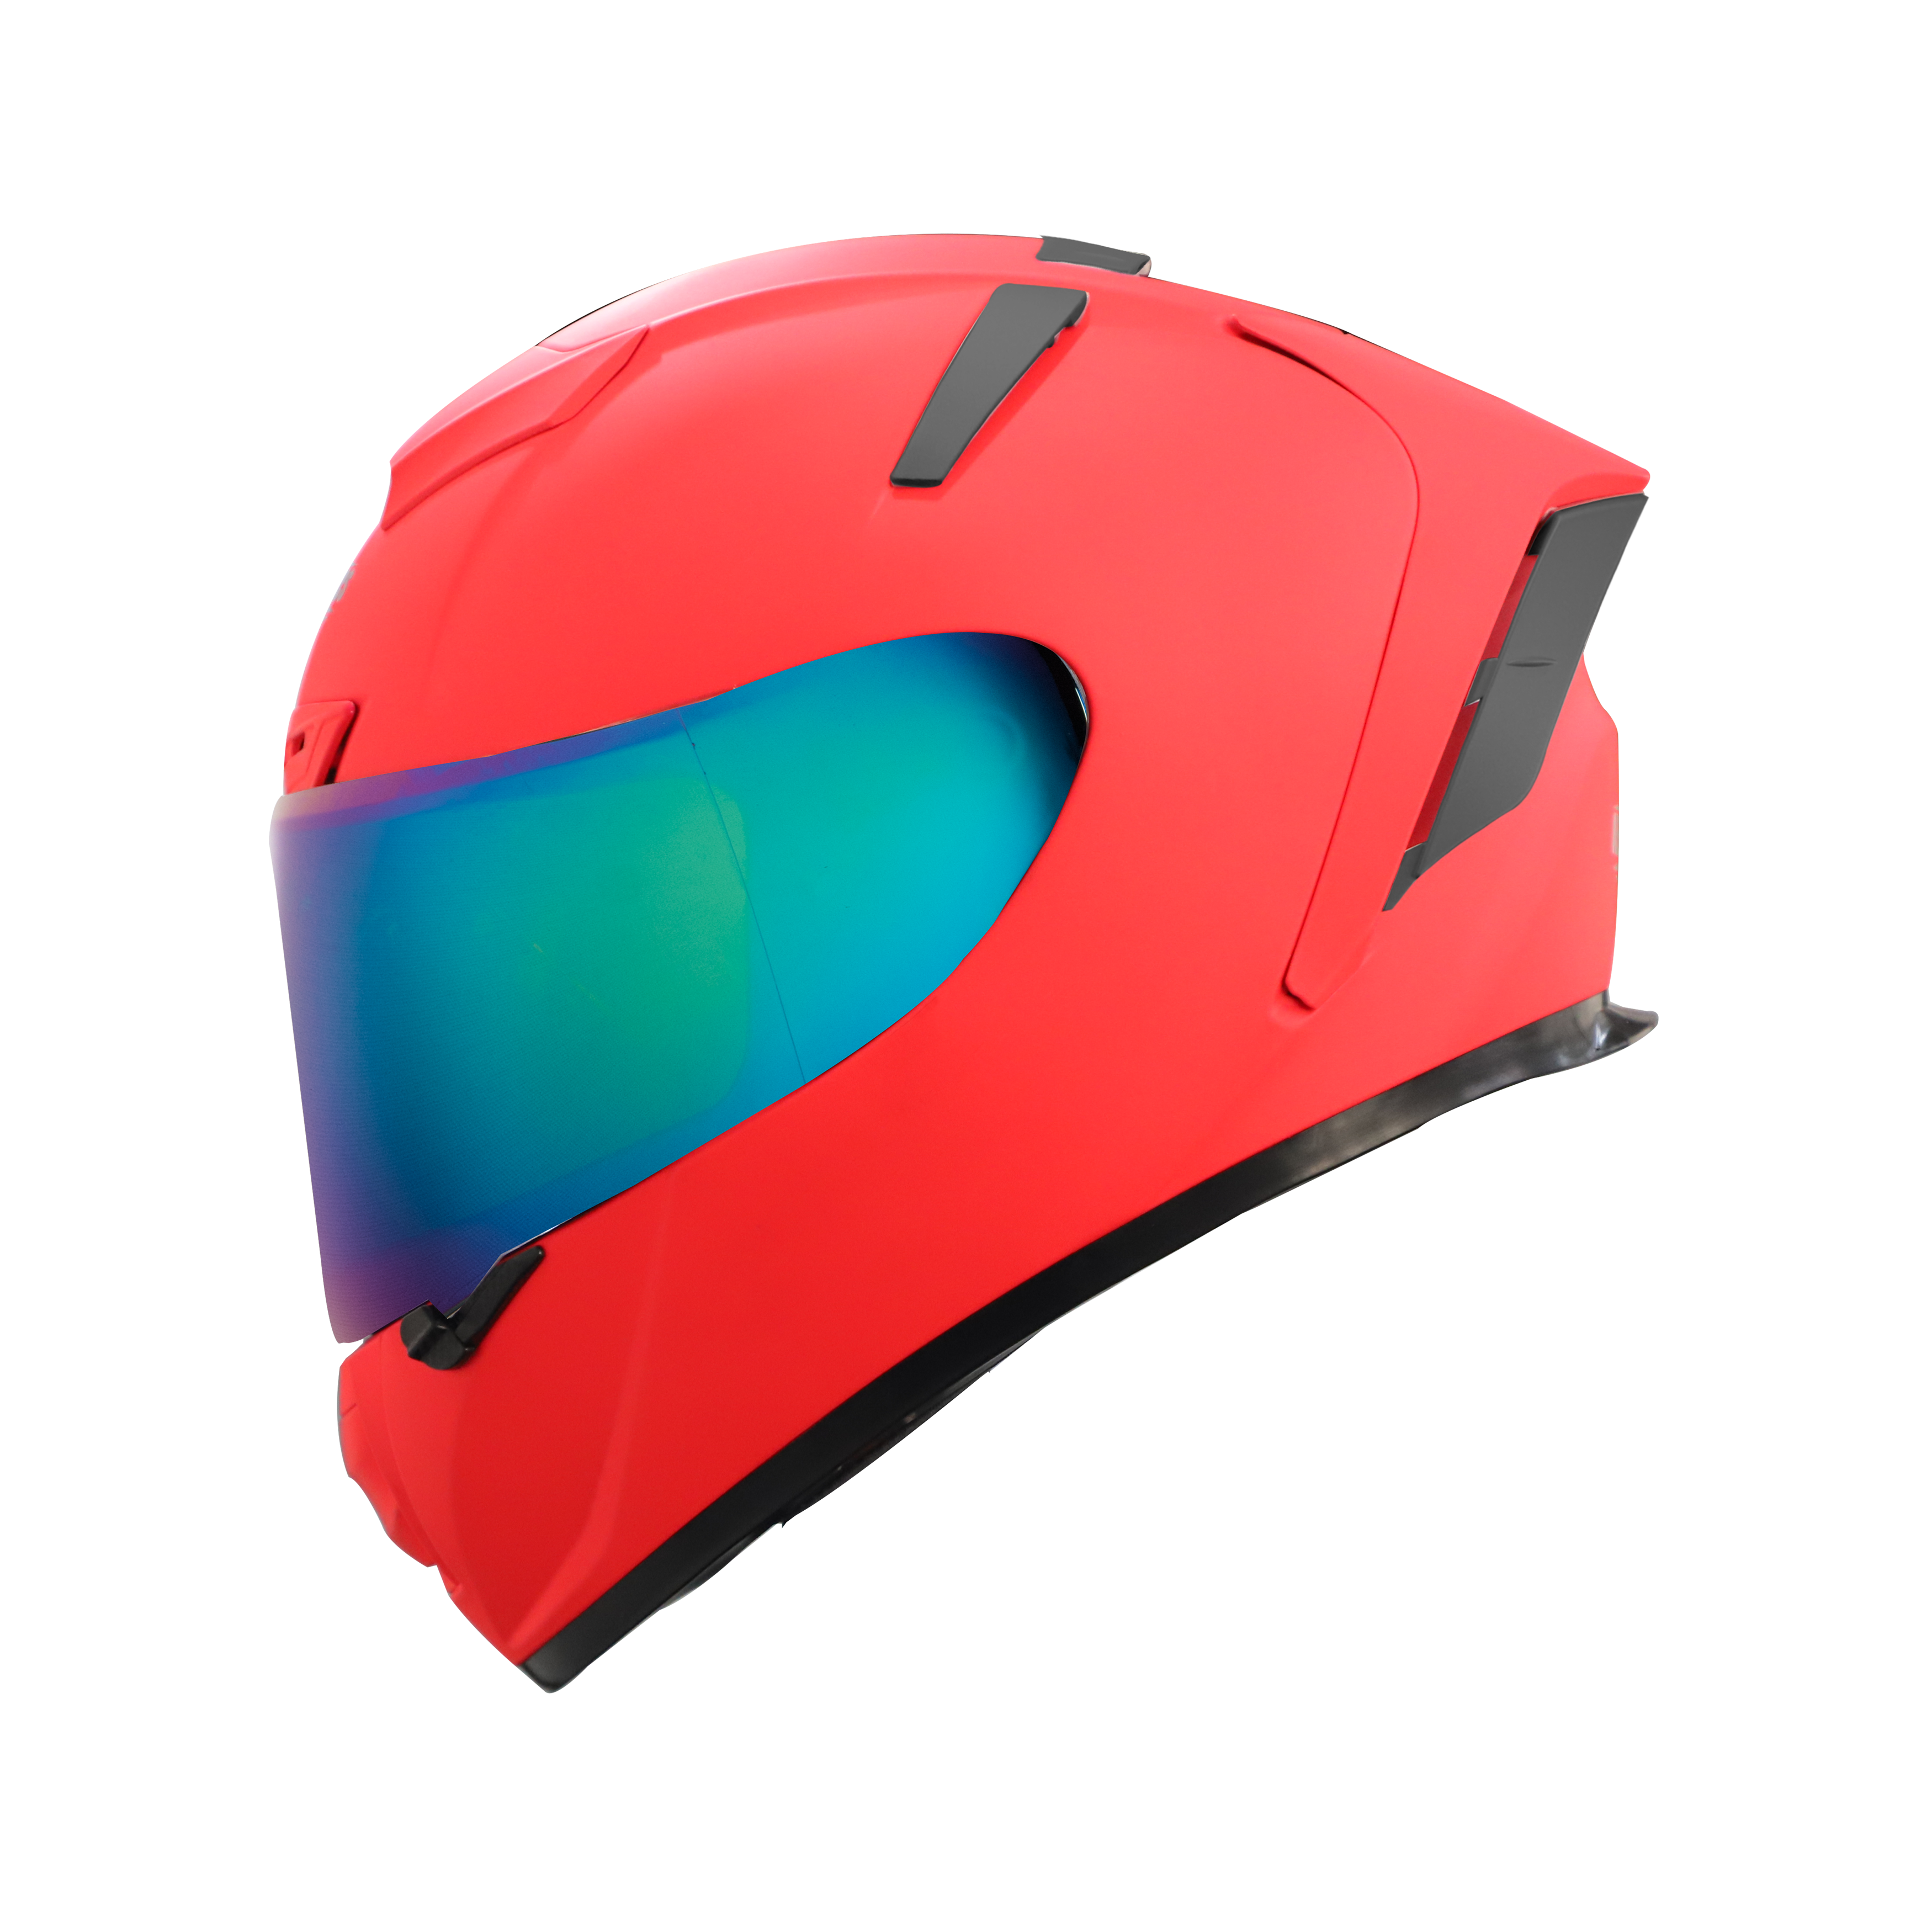 Steelbird SA-2 7Wings Super Aeronautics Full Face Helmet (Glossy Fluo Watermelon With Chrome Rainbow Visor)